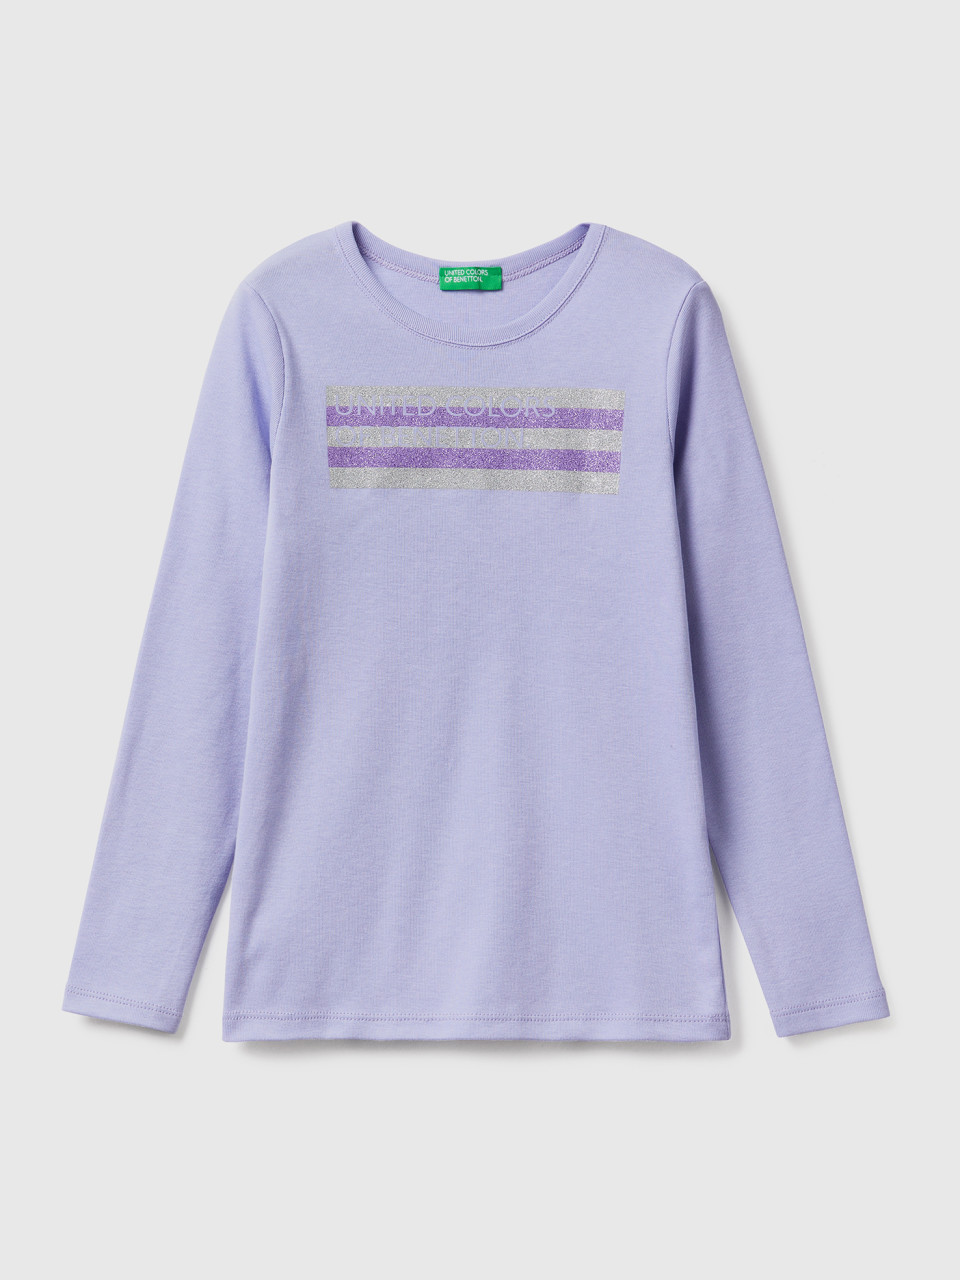 Benetton, Long Sleeve T-shirt With Glitter Print, Lilac, Kids